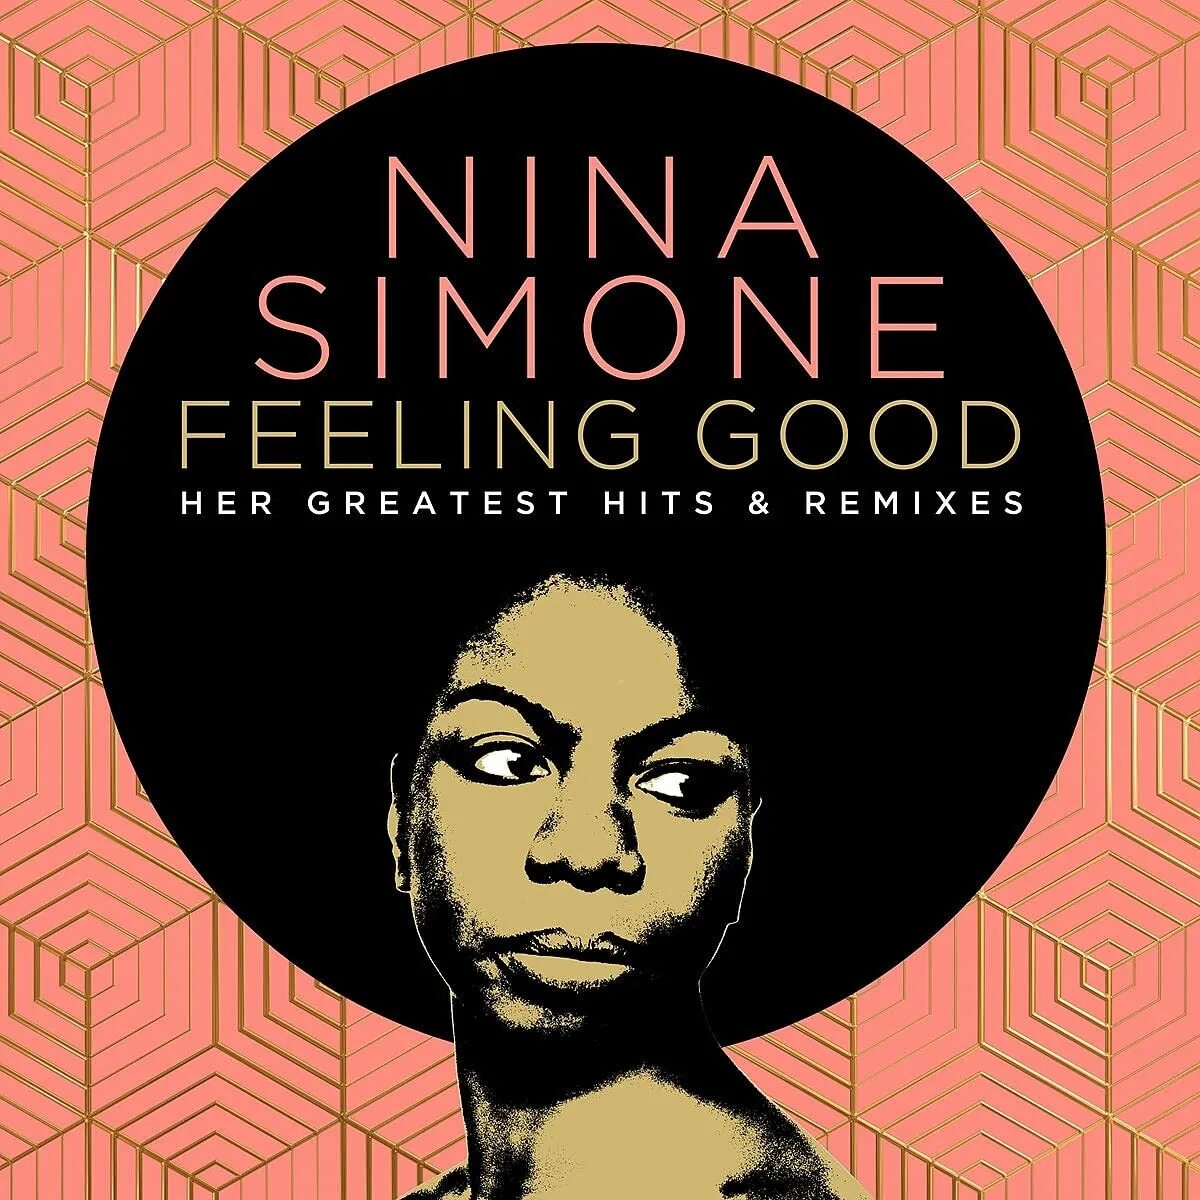 My feeling good. Nina Simone 2022. Nina Simone 2013. Nina Simone album.